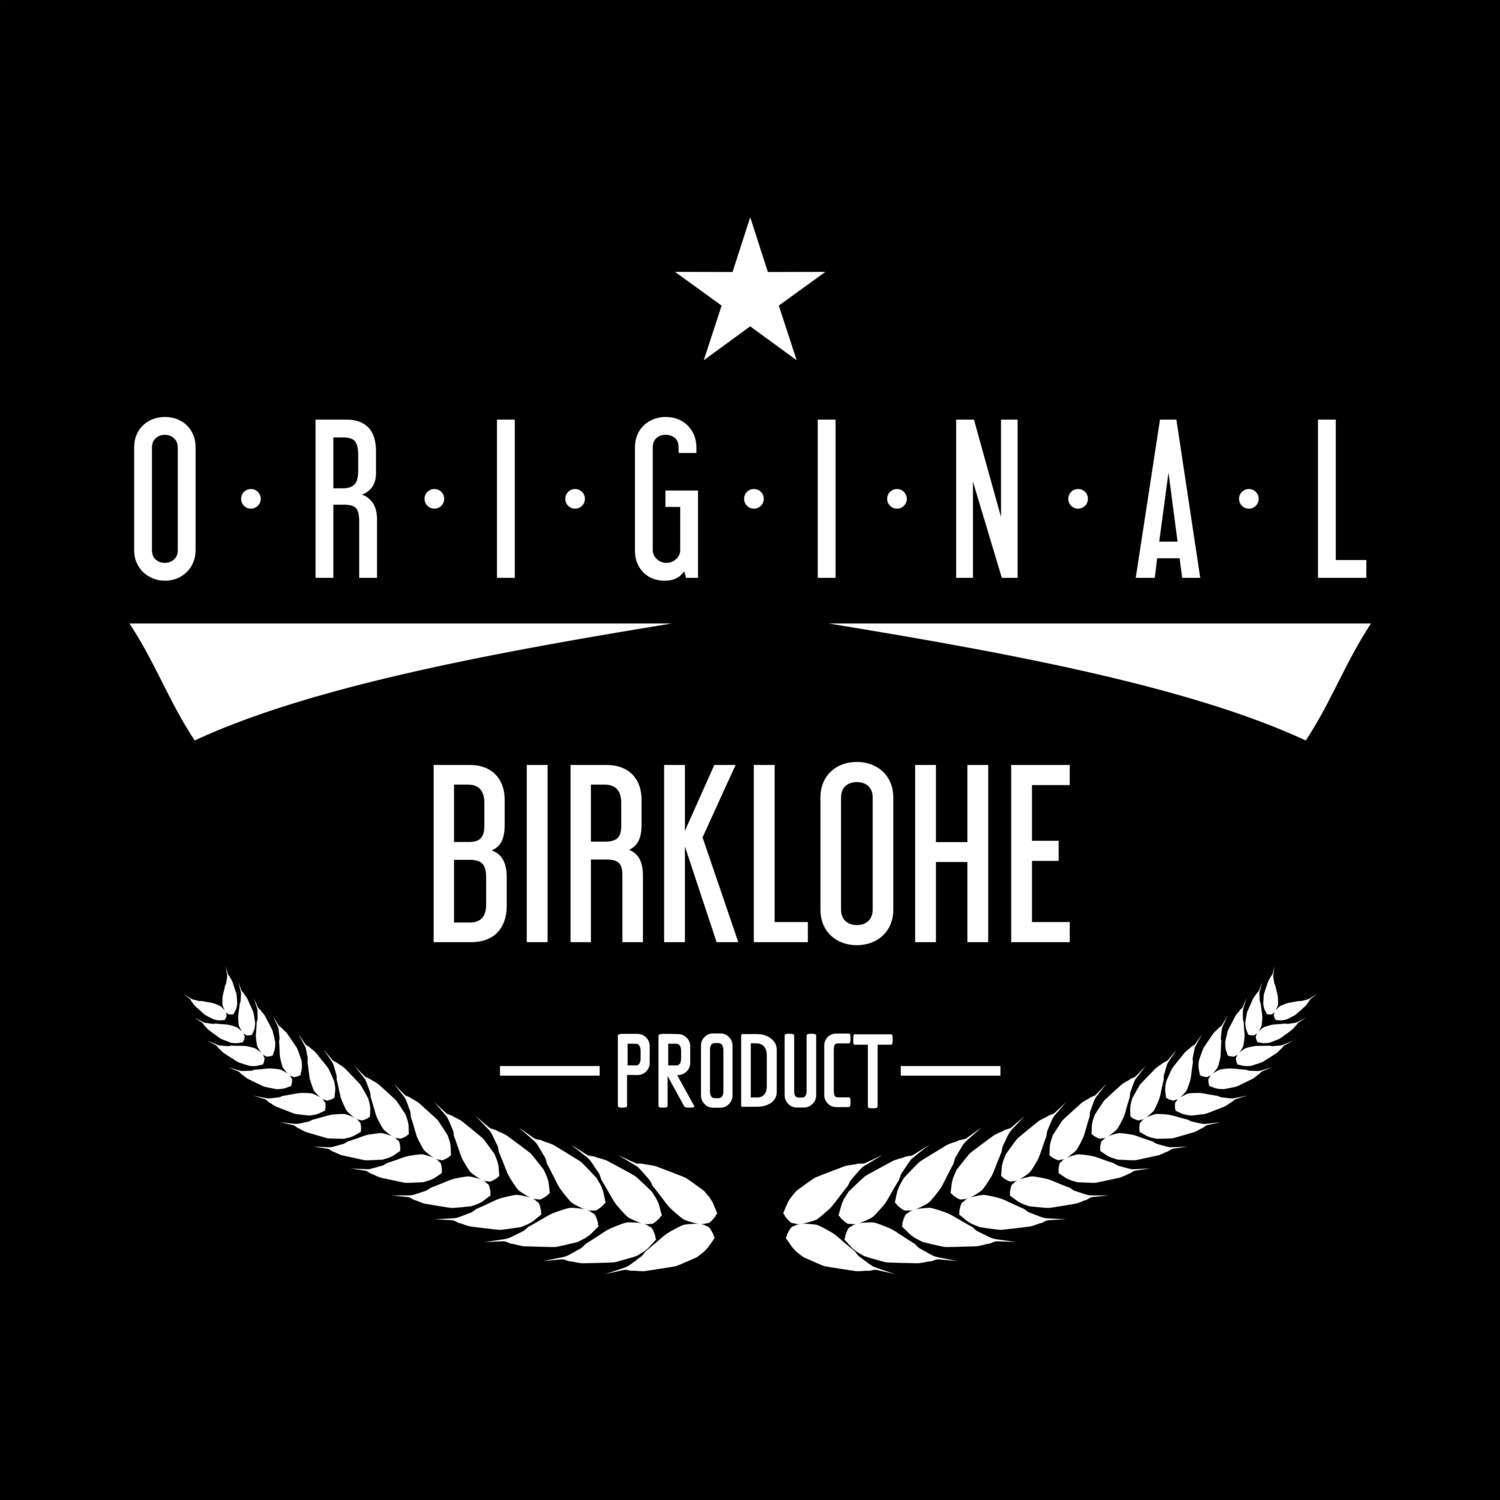 Birklohe T-Shirt »Original Product«